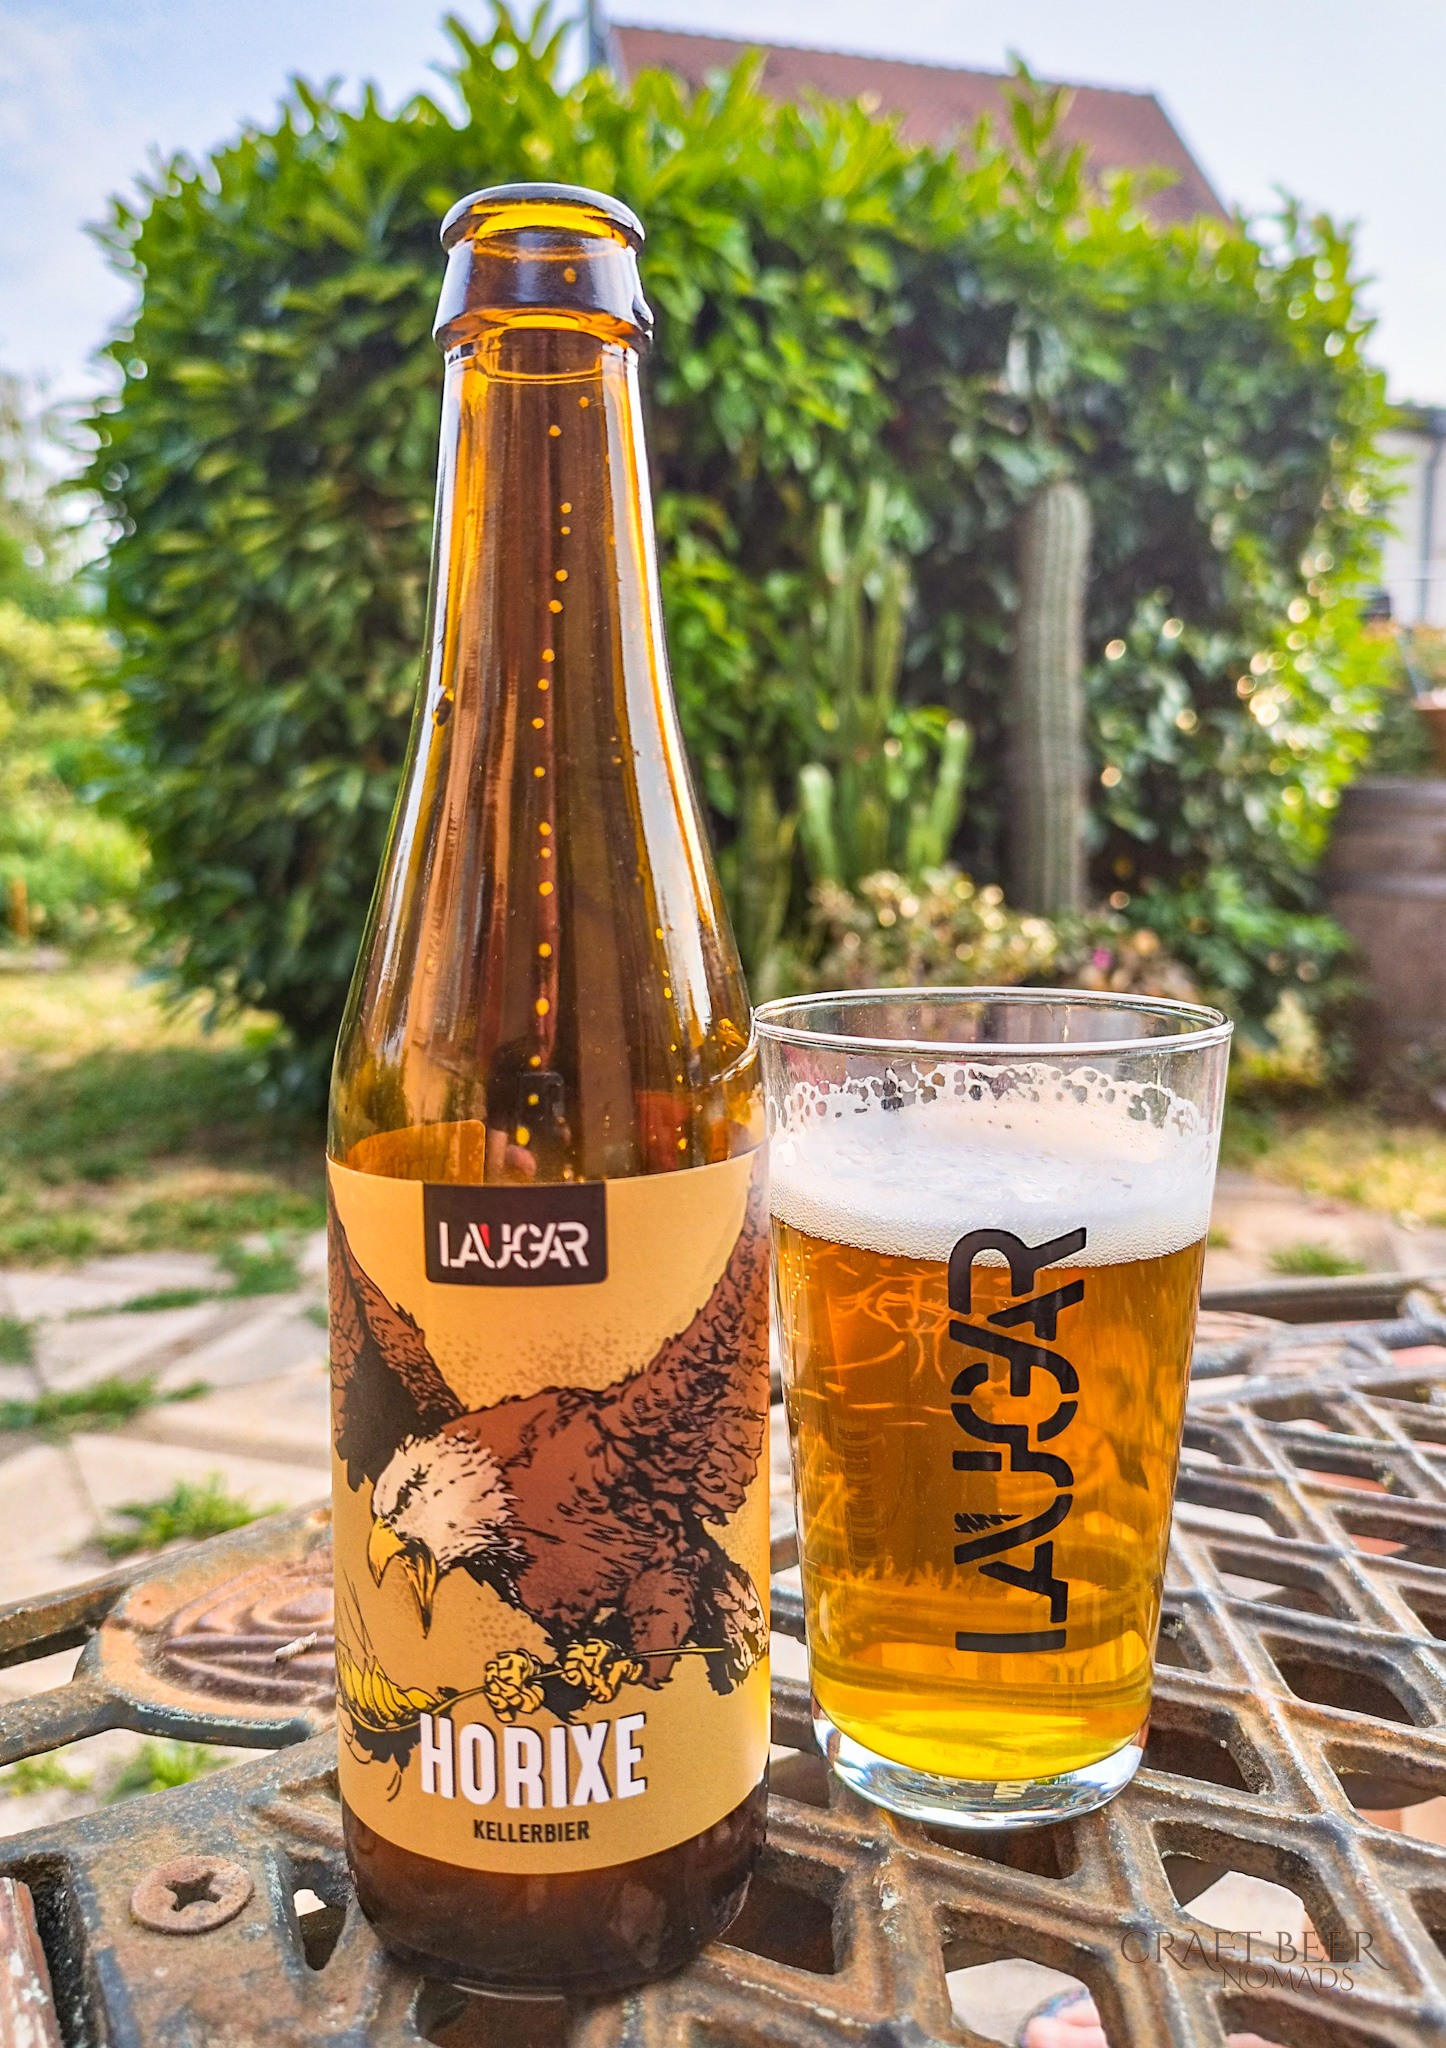 Horixe Kellerbier | Craft Beer in the Basque Country: Laugar Brewery | Craft Beer Nomads